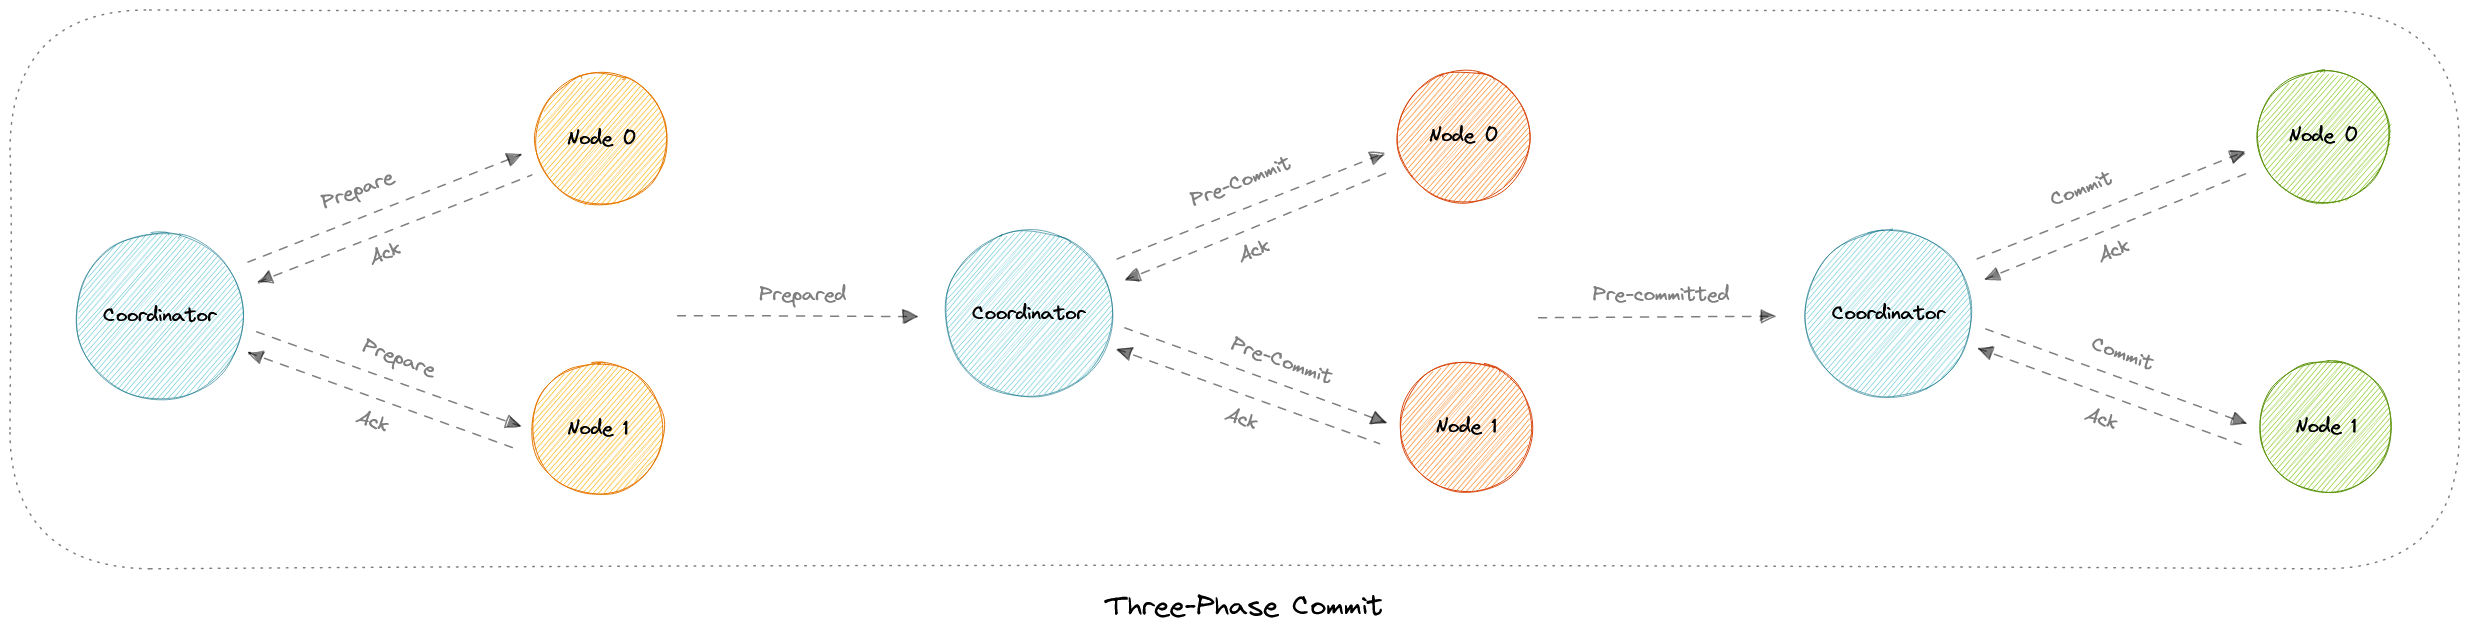 three-phase-commit